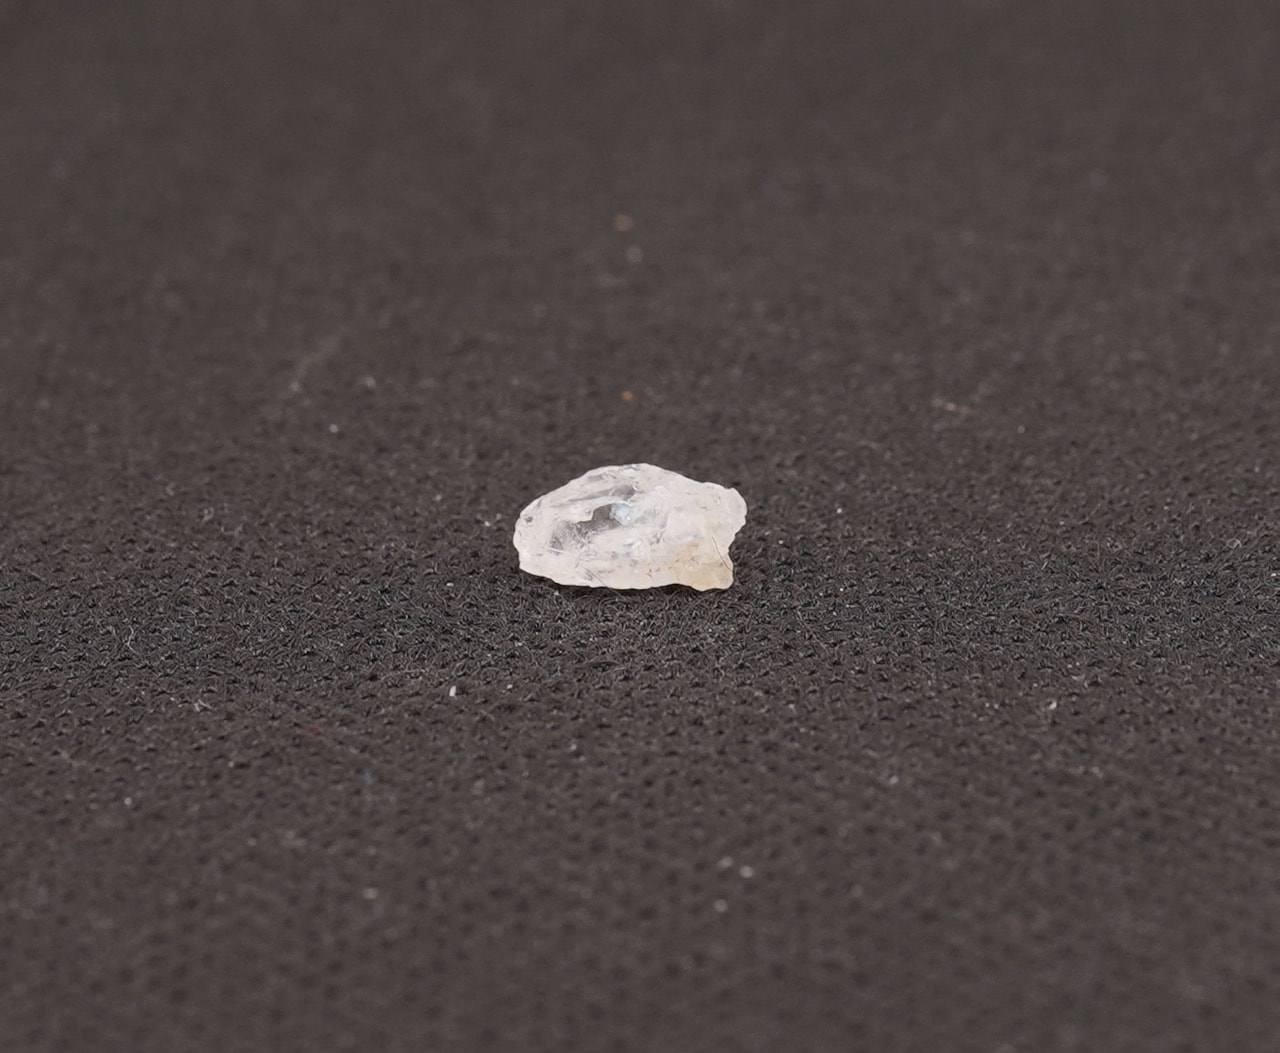 Fenacit nigerian cristal natural unicat f309